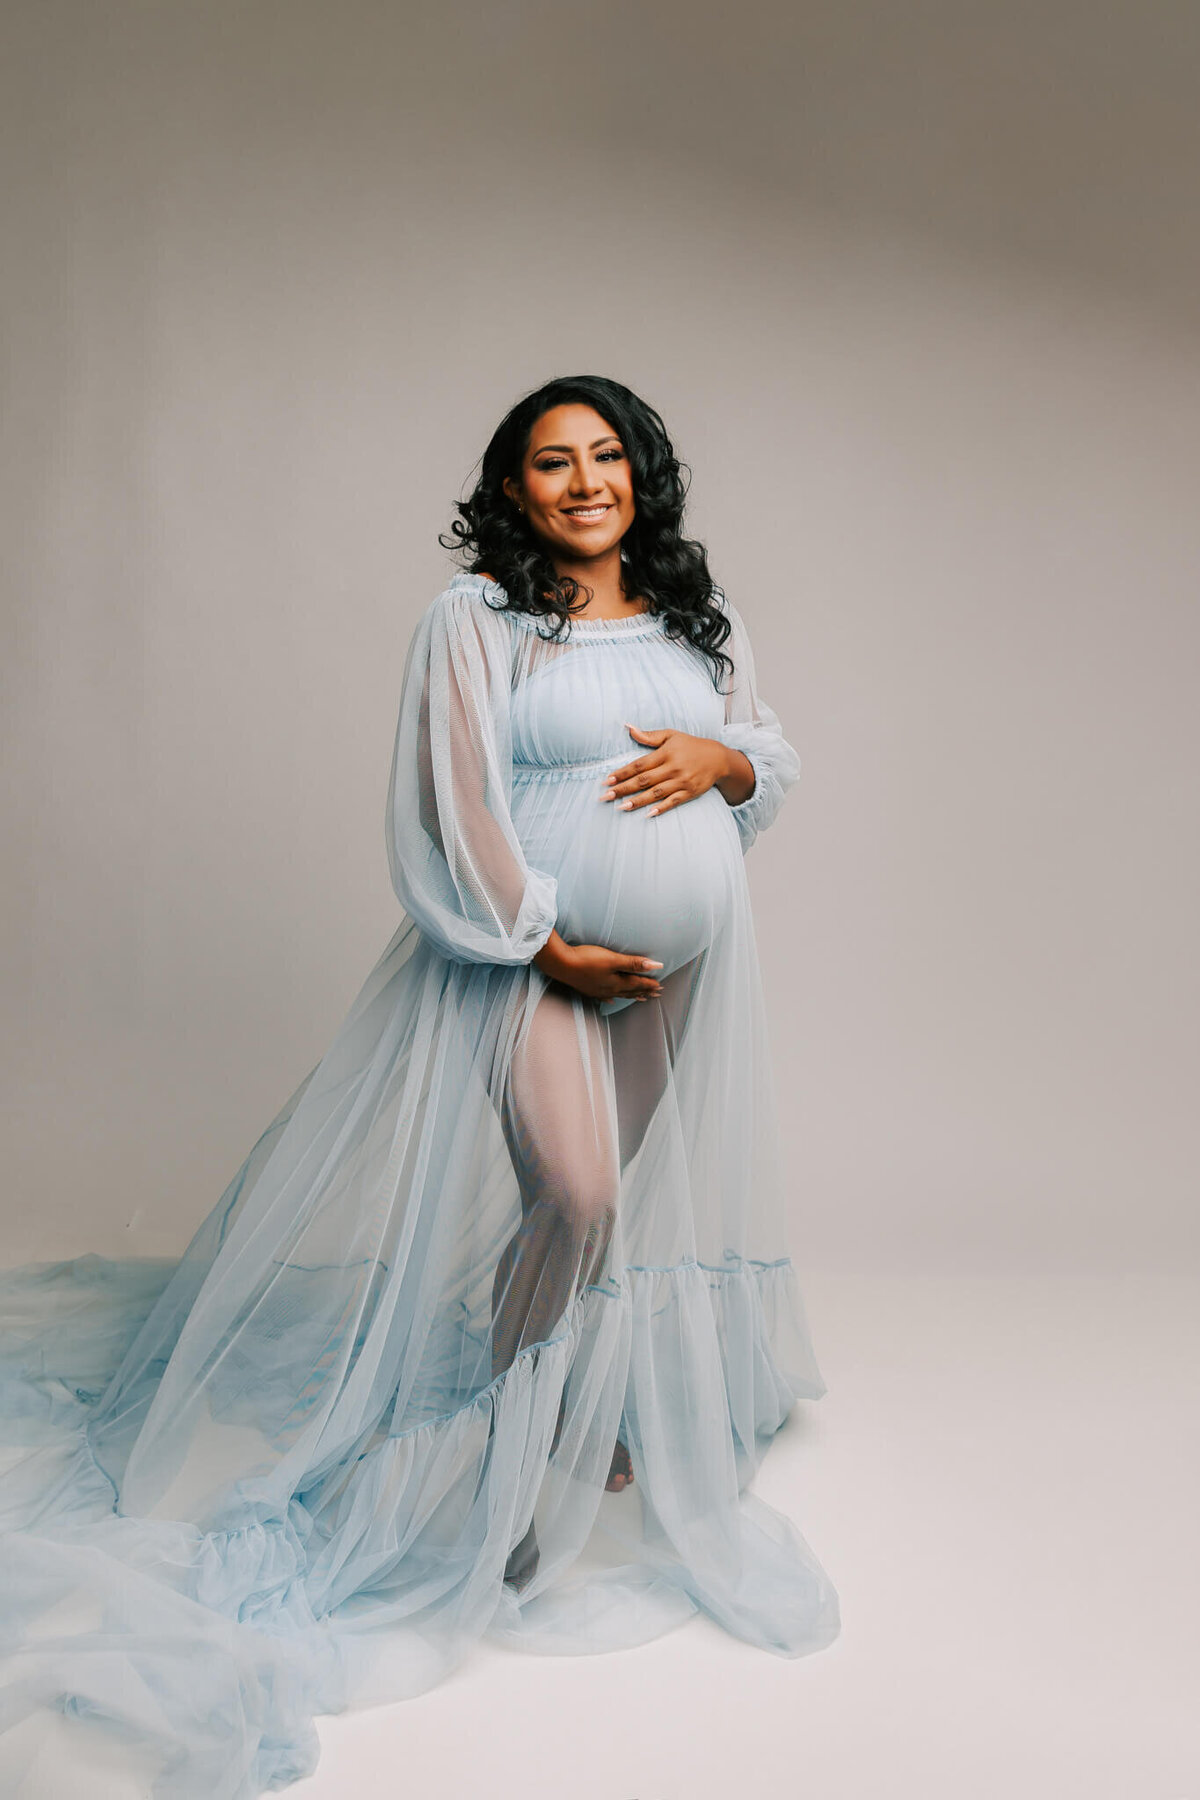 portland woman posing for studio maternity photography  wearing a blue dress